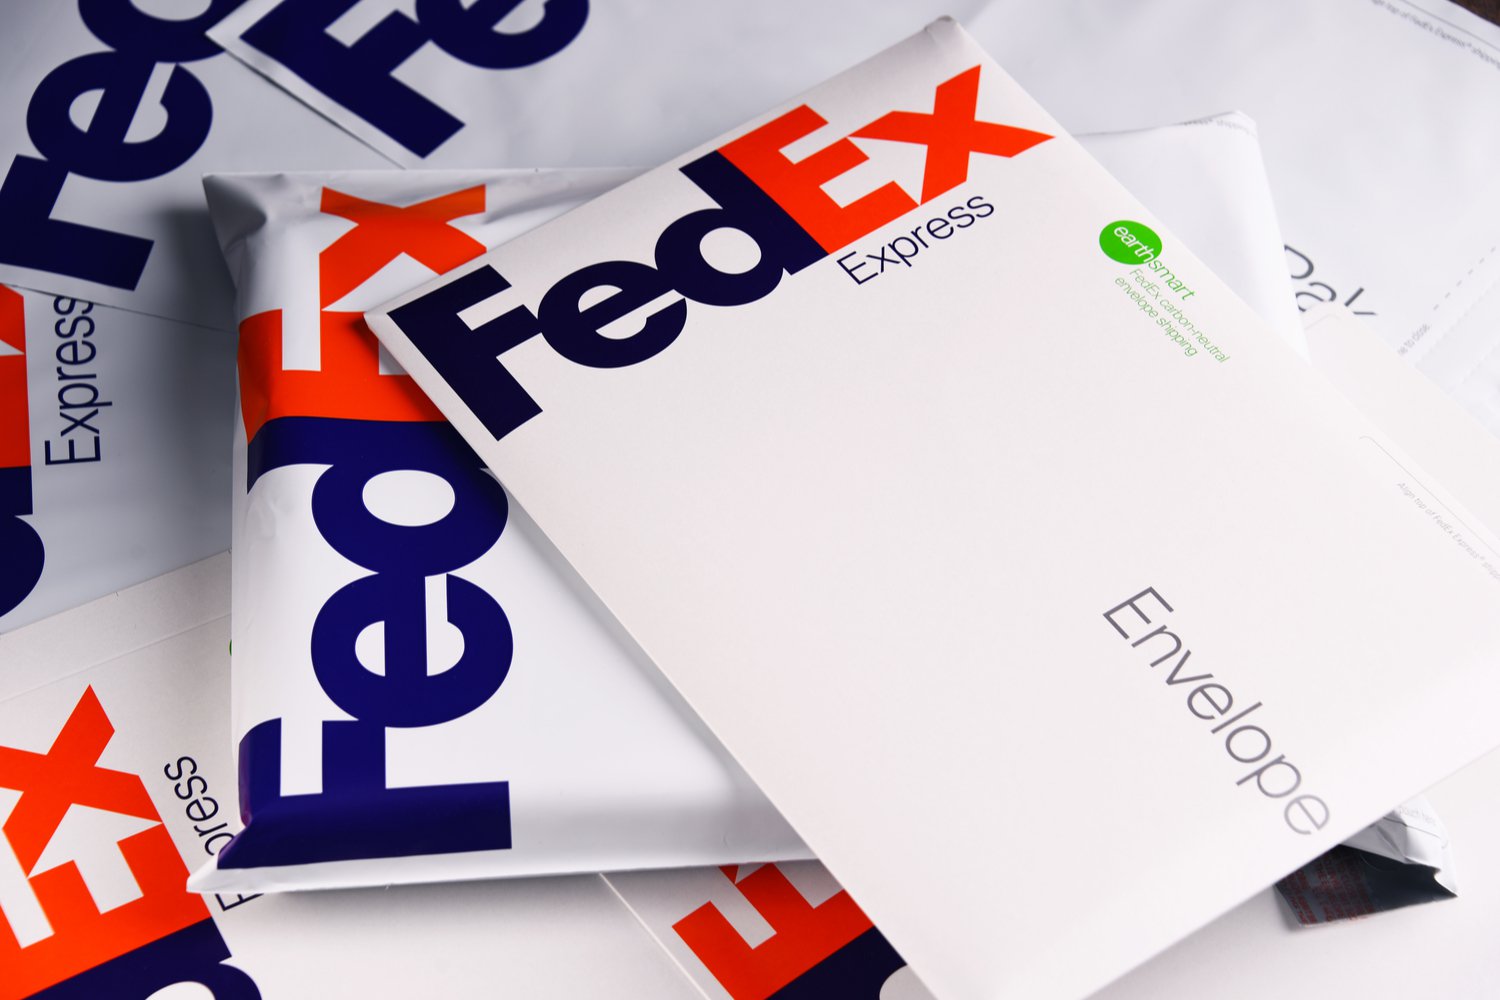 FedEx Joins Hyperledger In Blockchain Consortium’s Latest Expansion